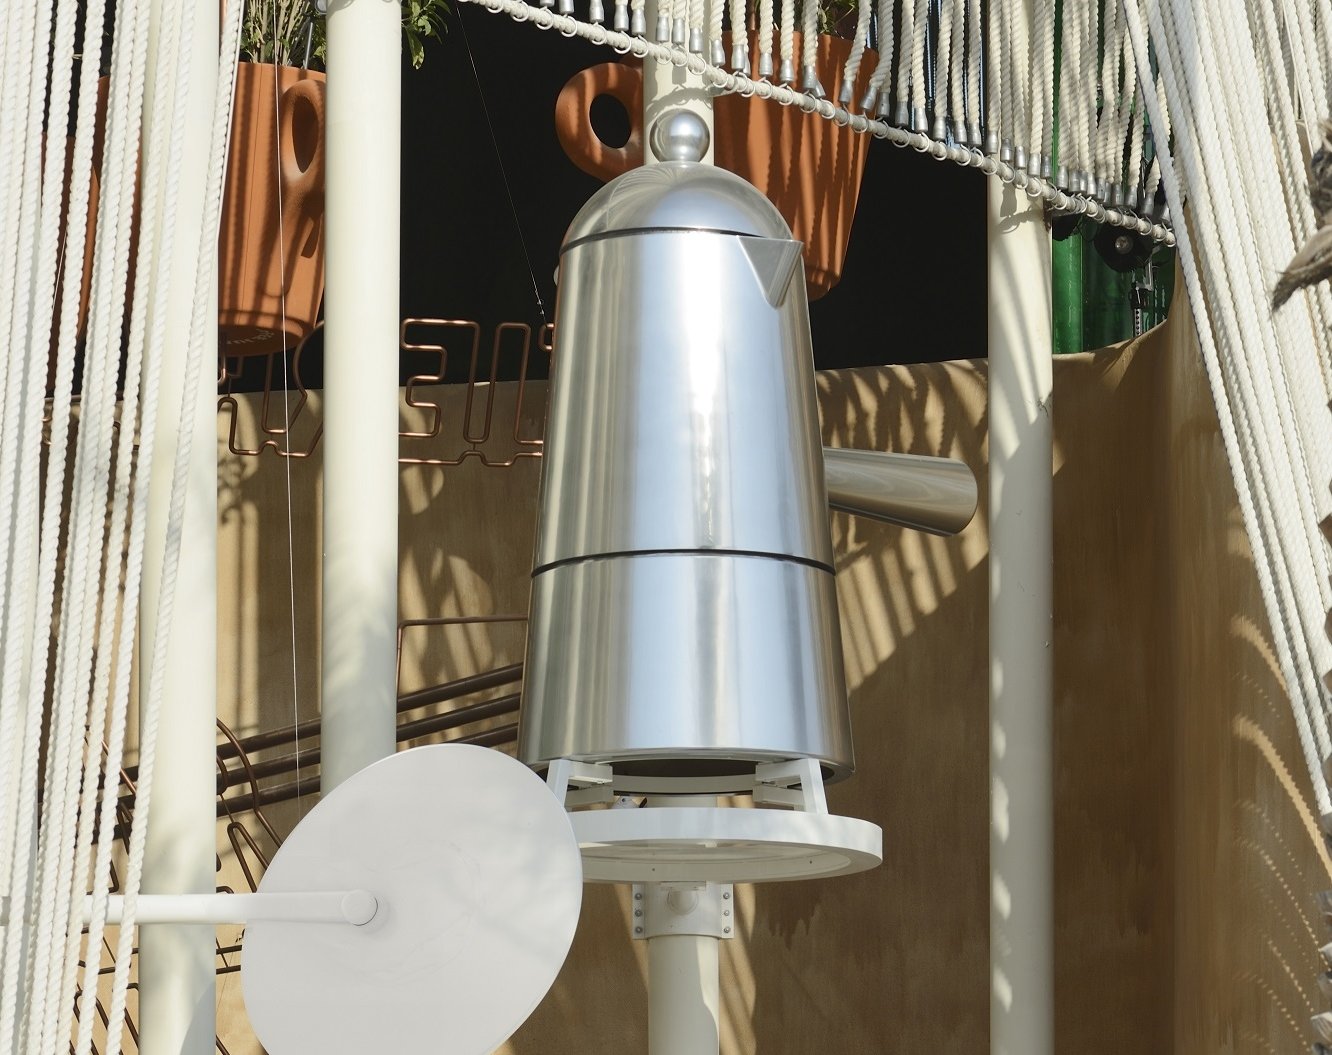 Solar Moka: Μια γιγάντια καφετιέρα που φτιάχνει καφέ με ηλιακή ενέργεια στην Expo Dubai 2020